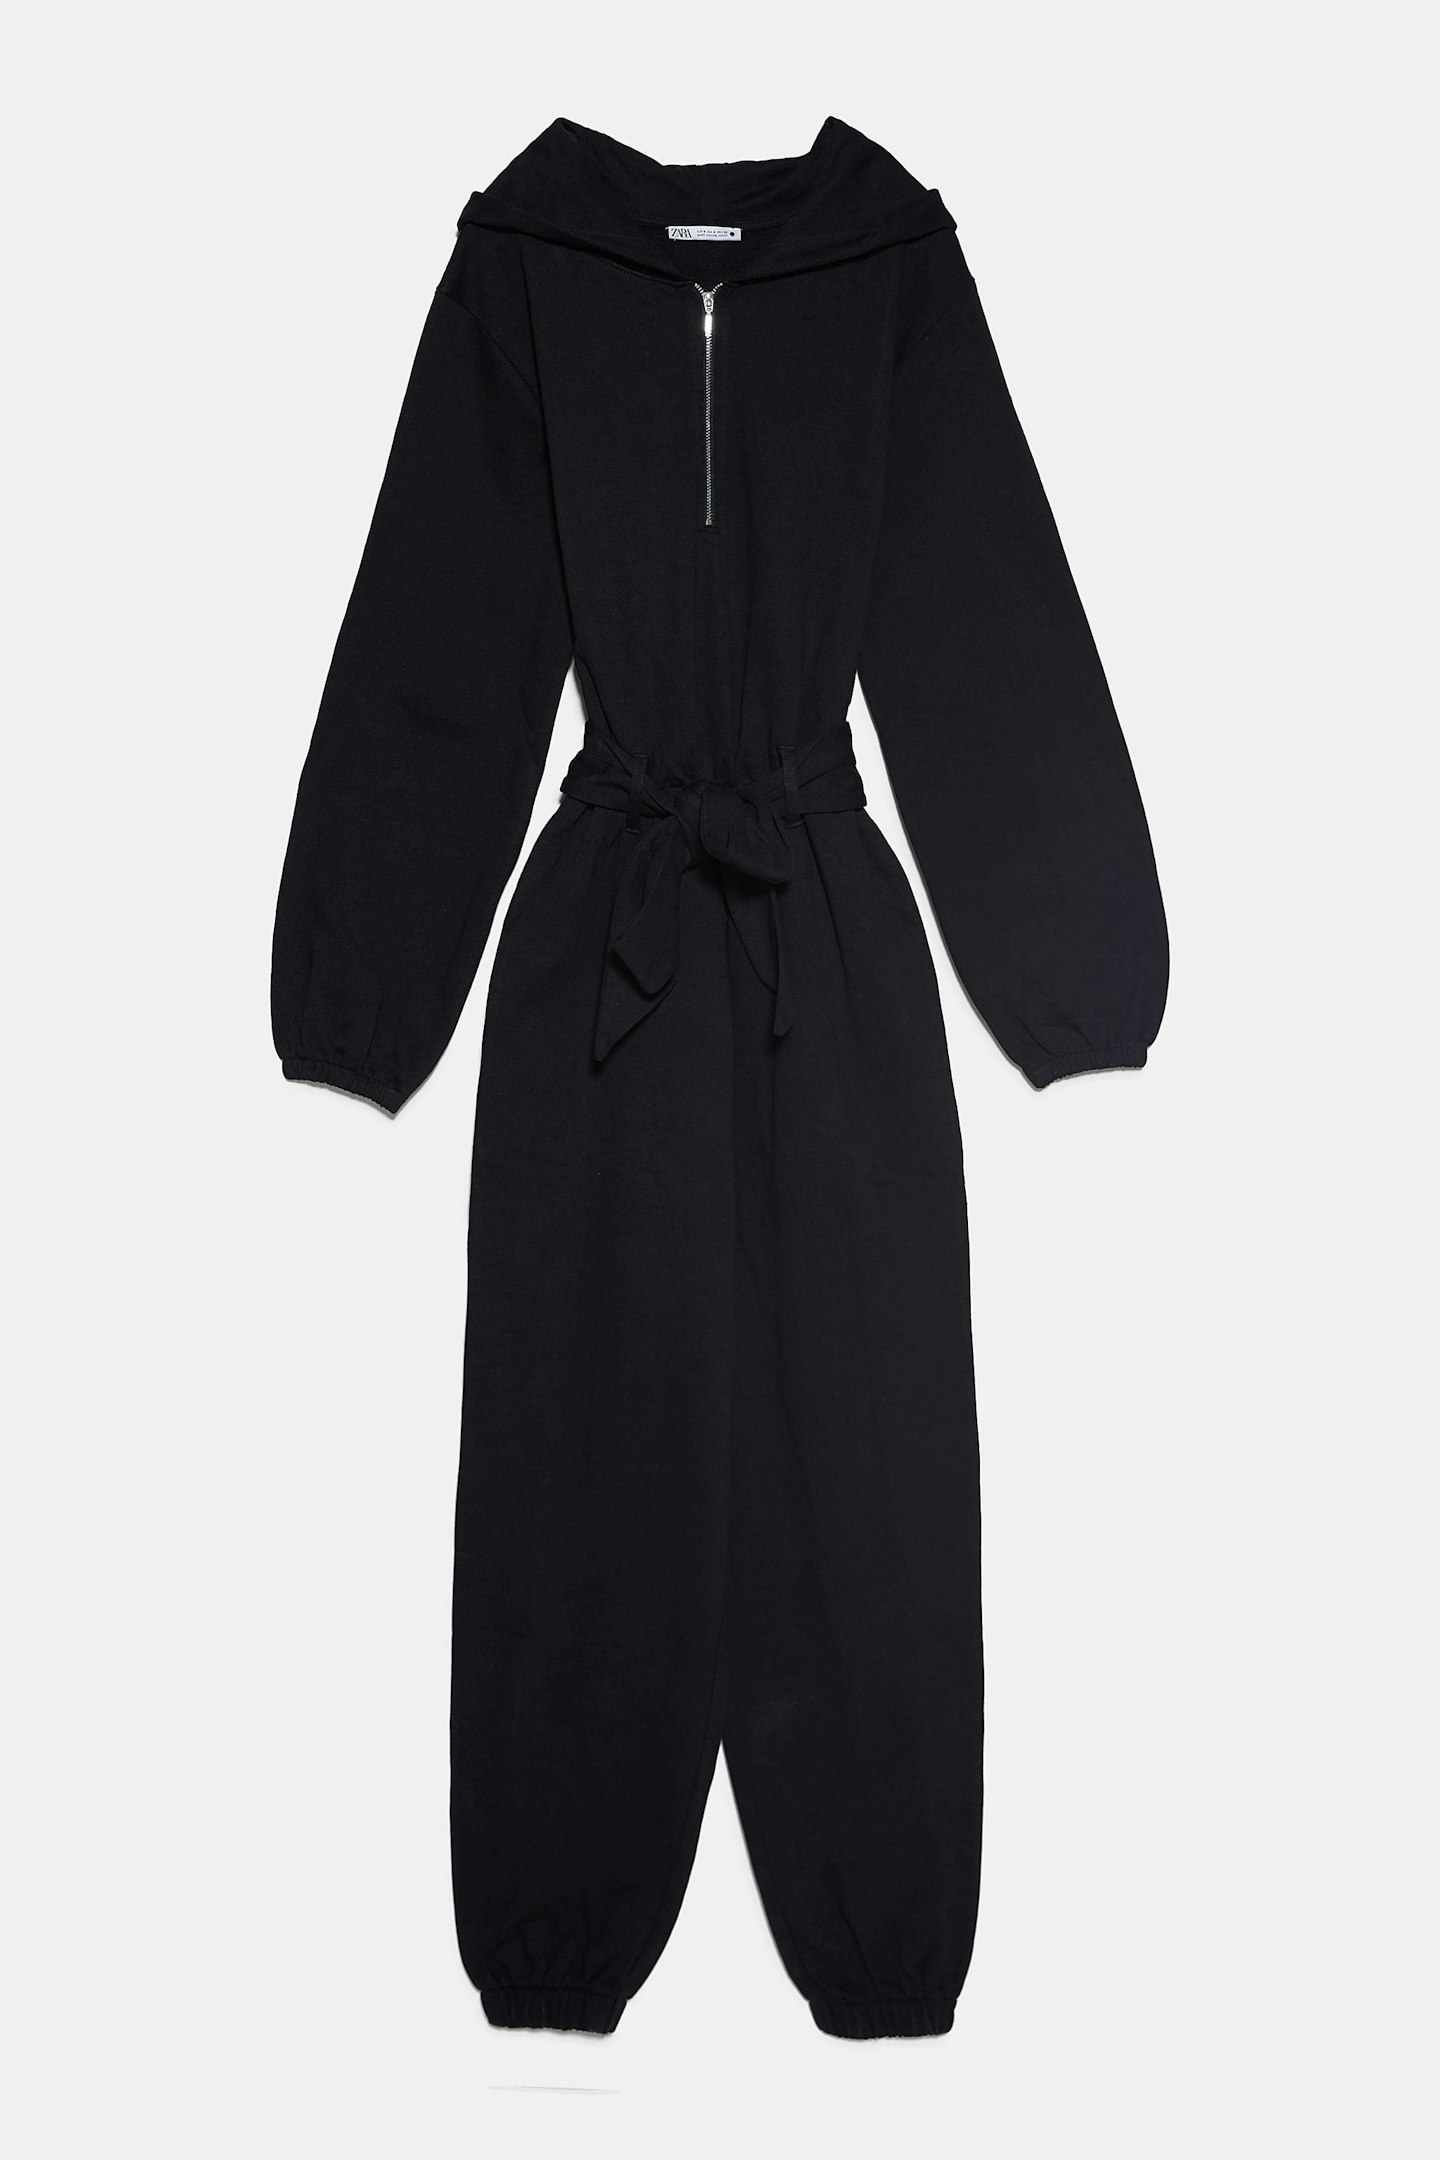 Cotton Jumpsuit, £29.99, Zara